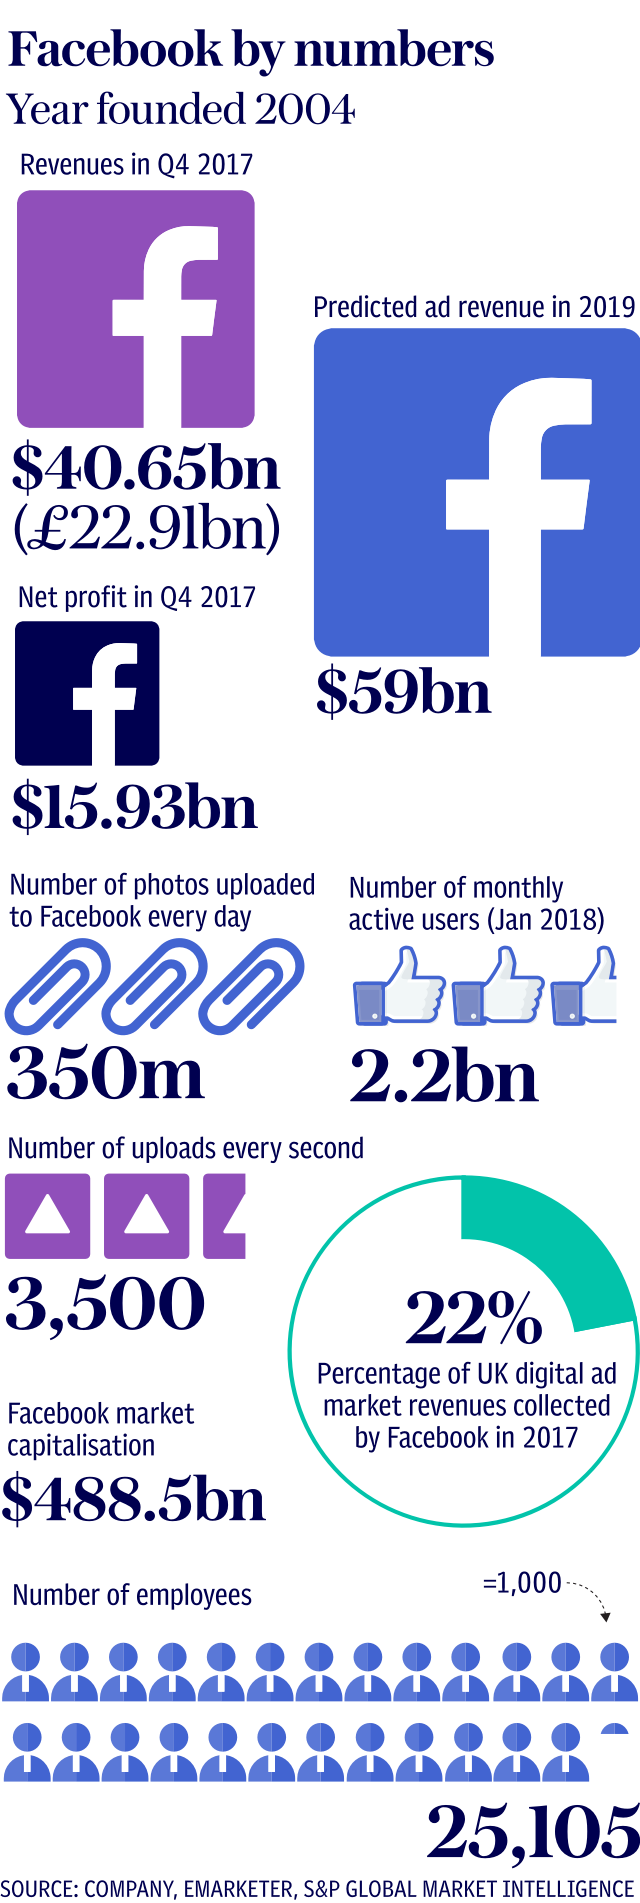 Facebook by numbers